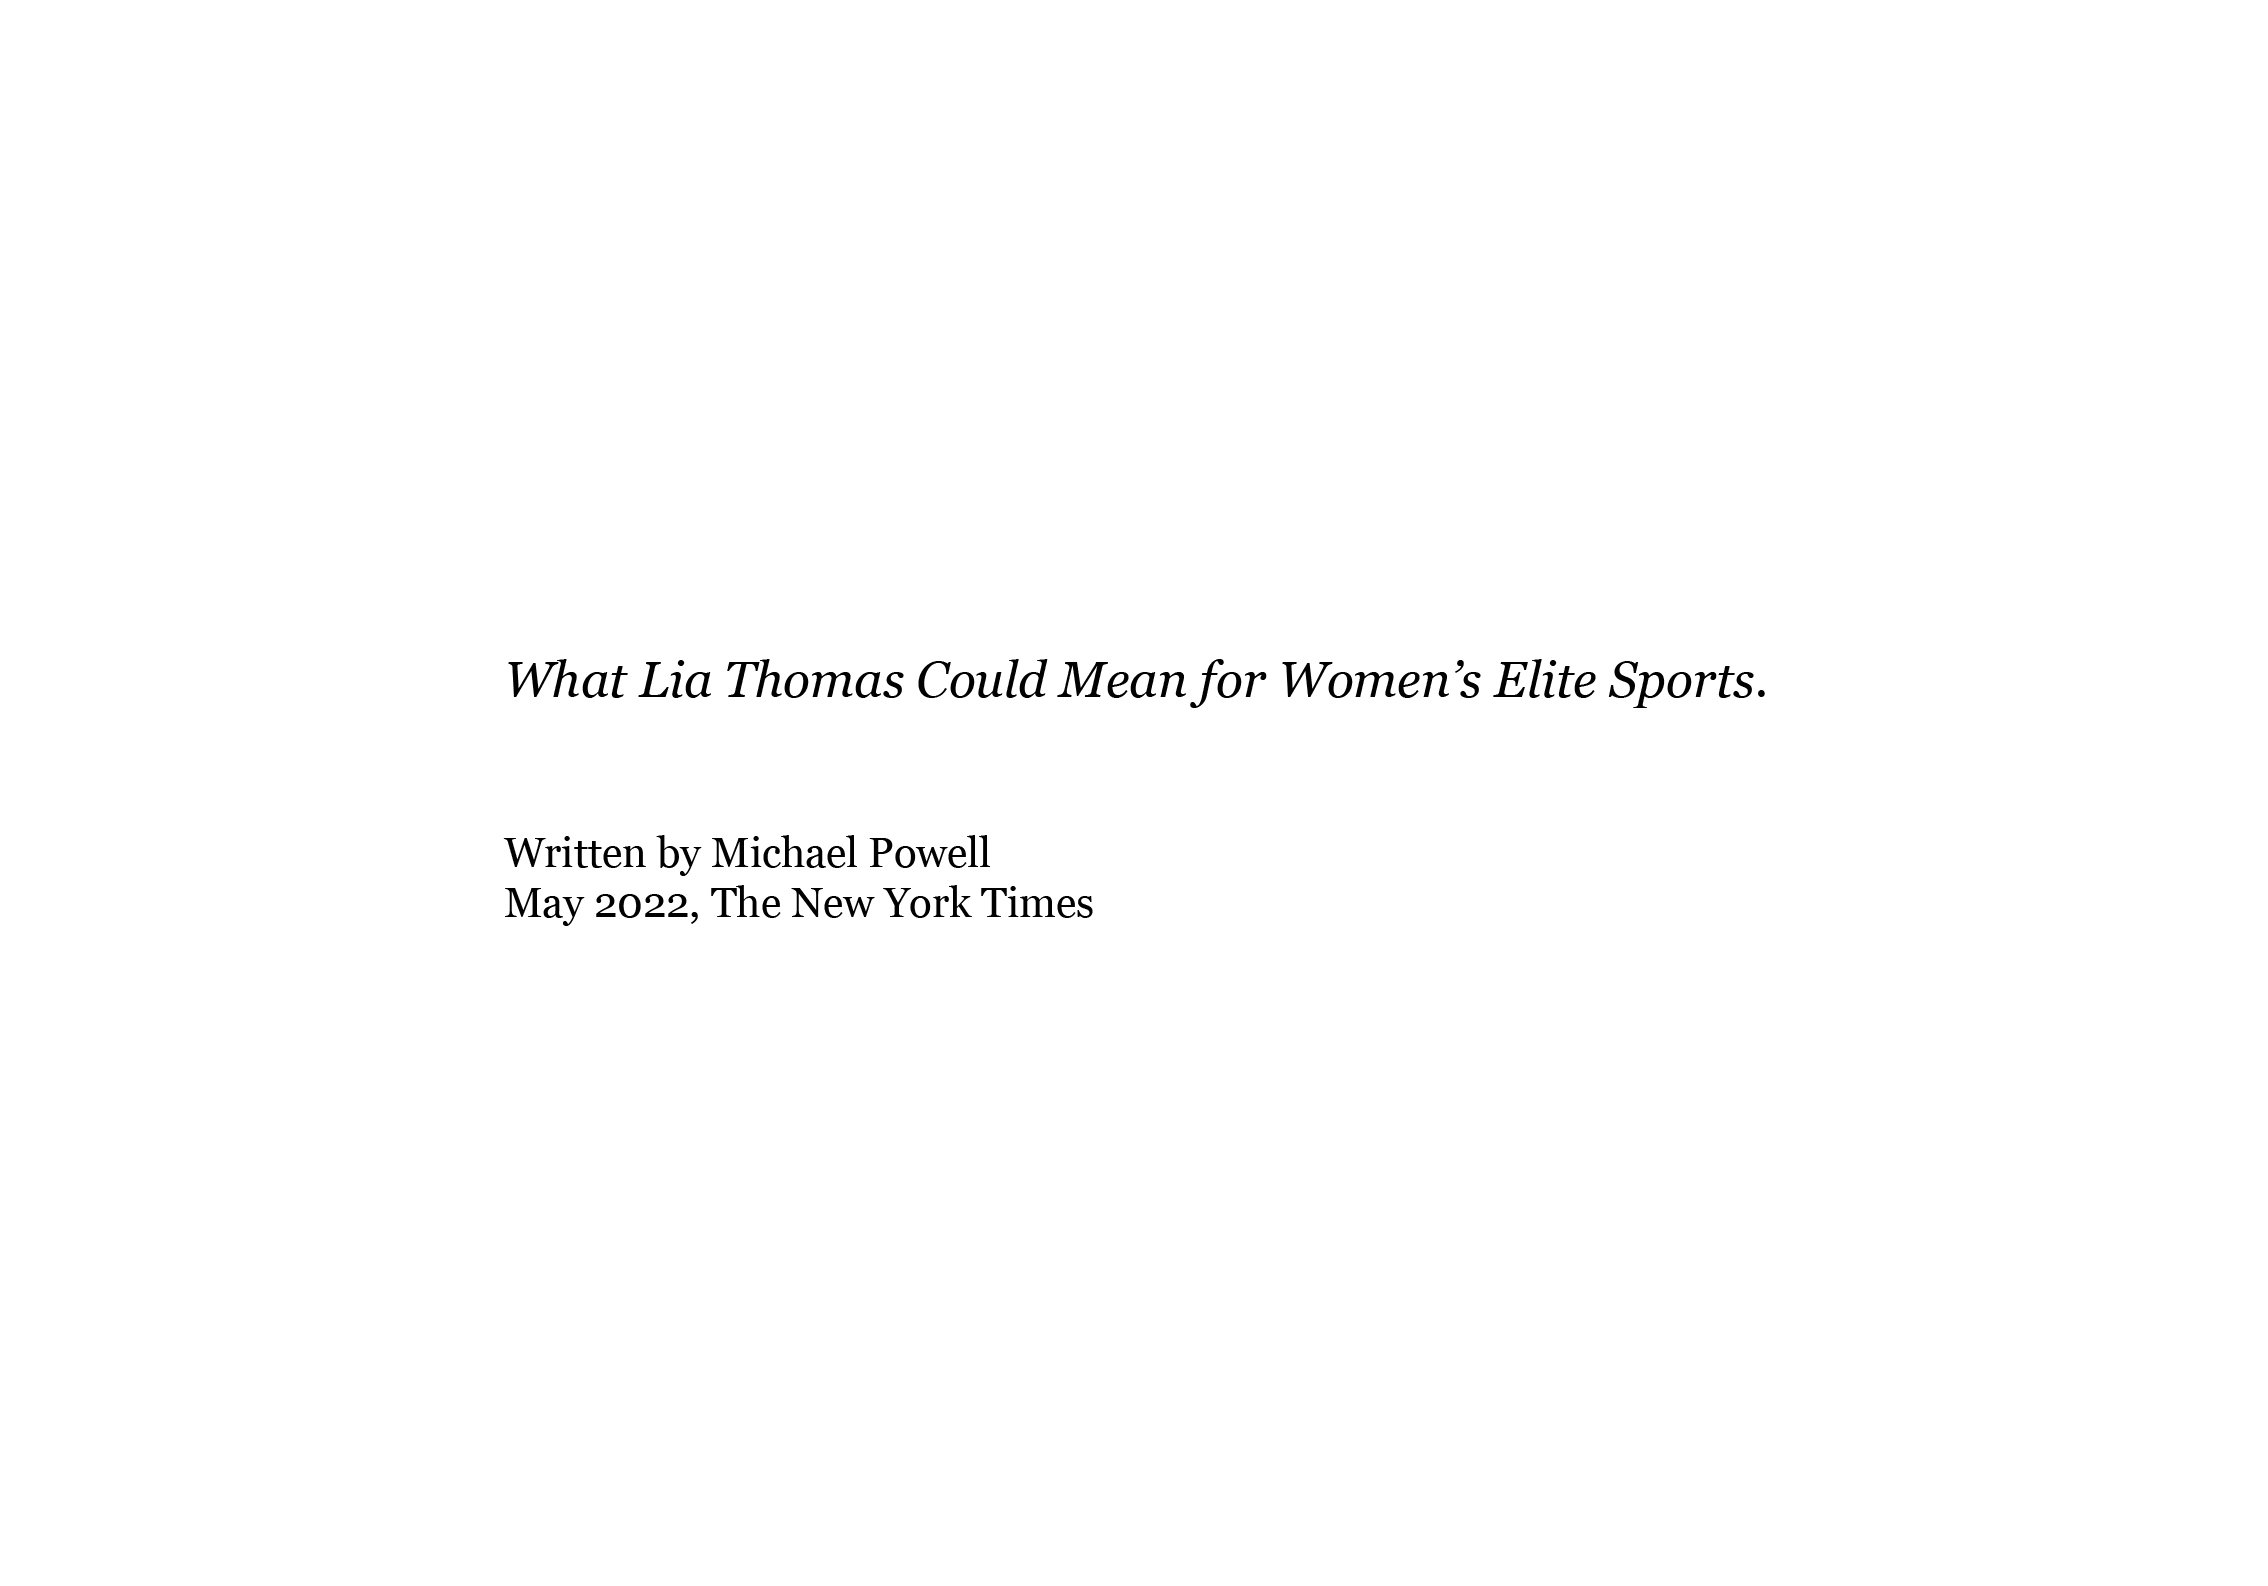  What Lia Thomas Could Mean for Women’s Elite Sports Photographed Chris Moiser - Elite Trans Athlete  The New York Times, 2022  